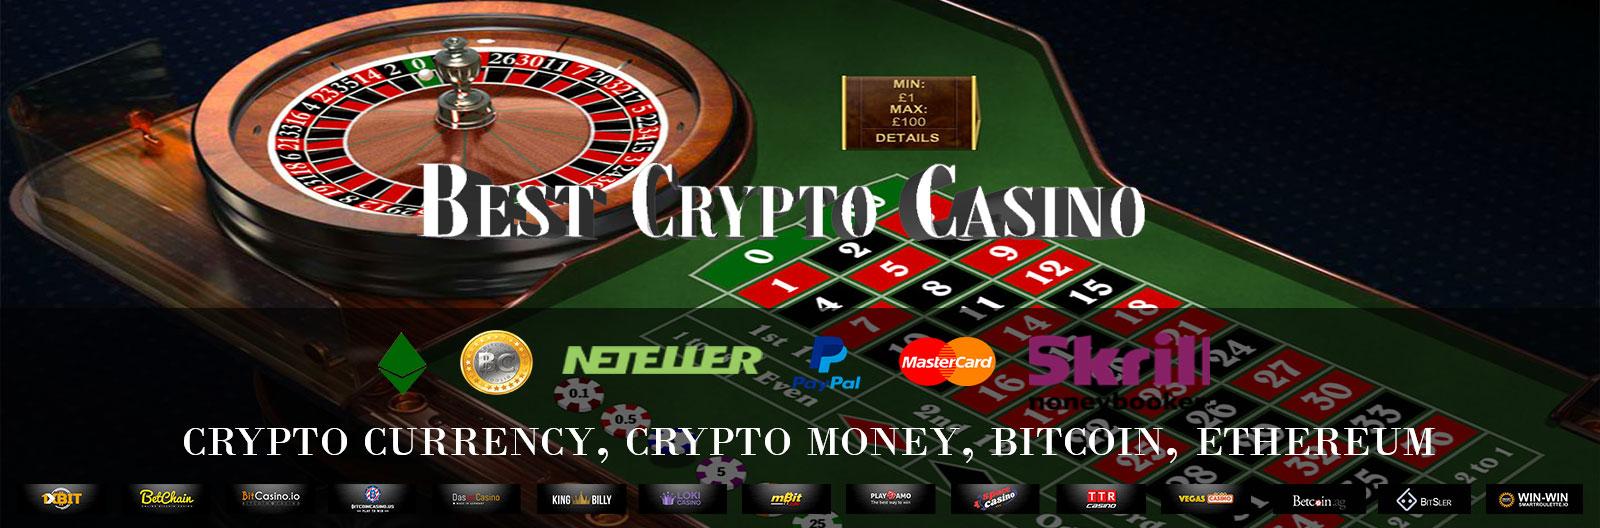 Bitstarz casino 20 gratisspinn